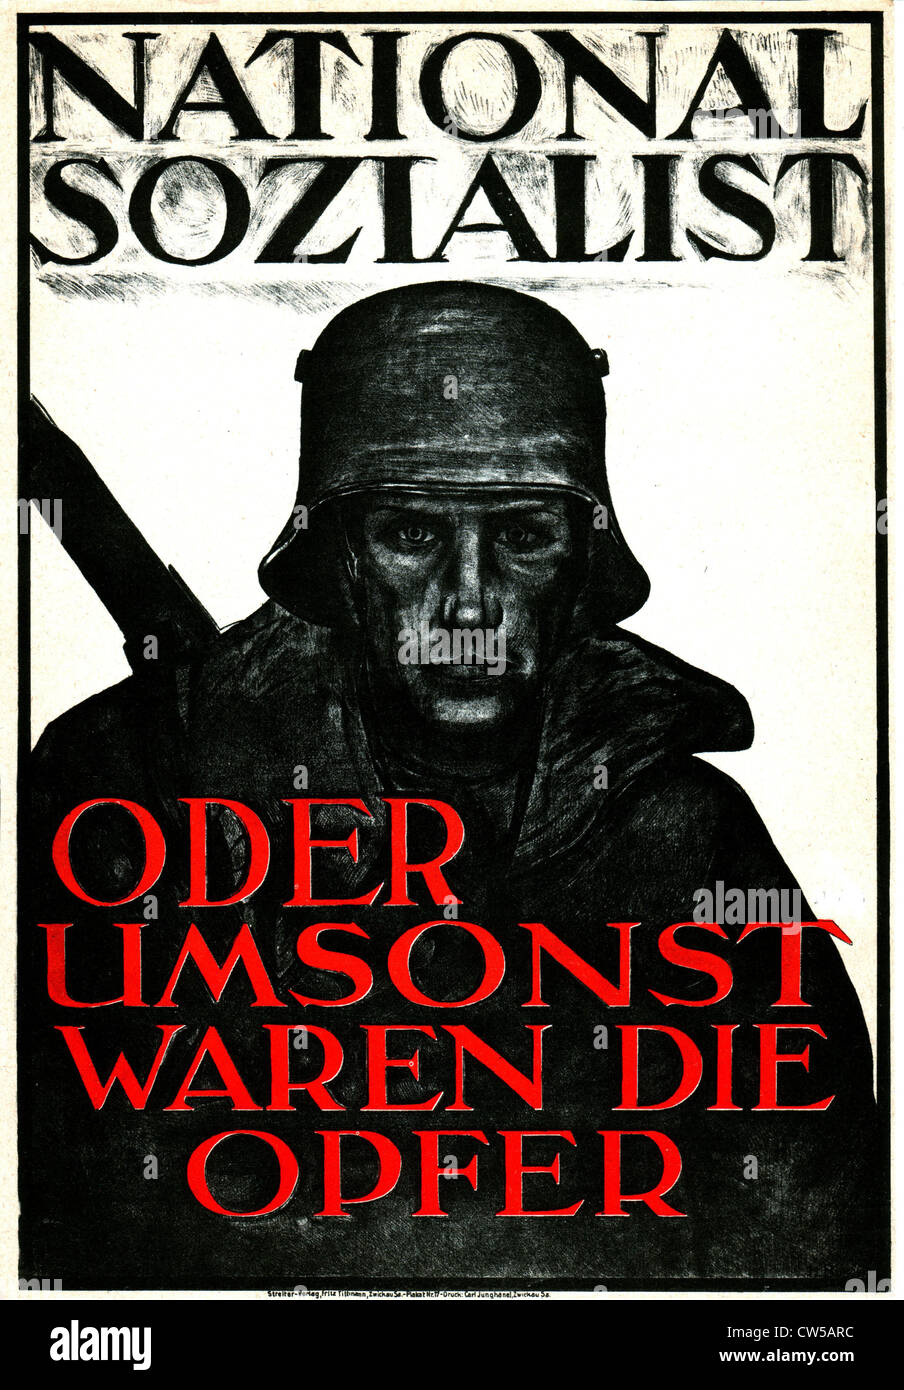 National-socialist propaganda poster Stock Photo